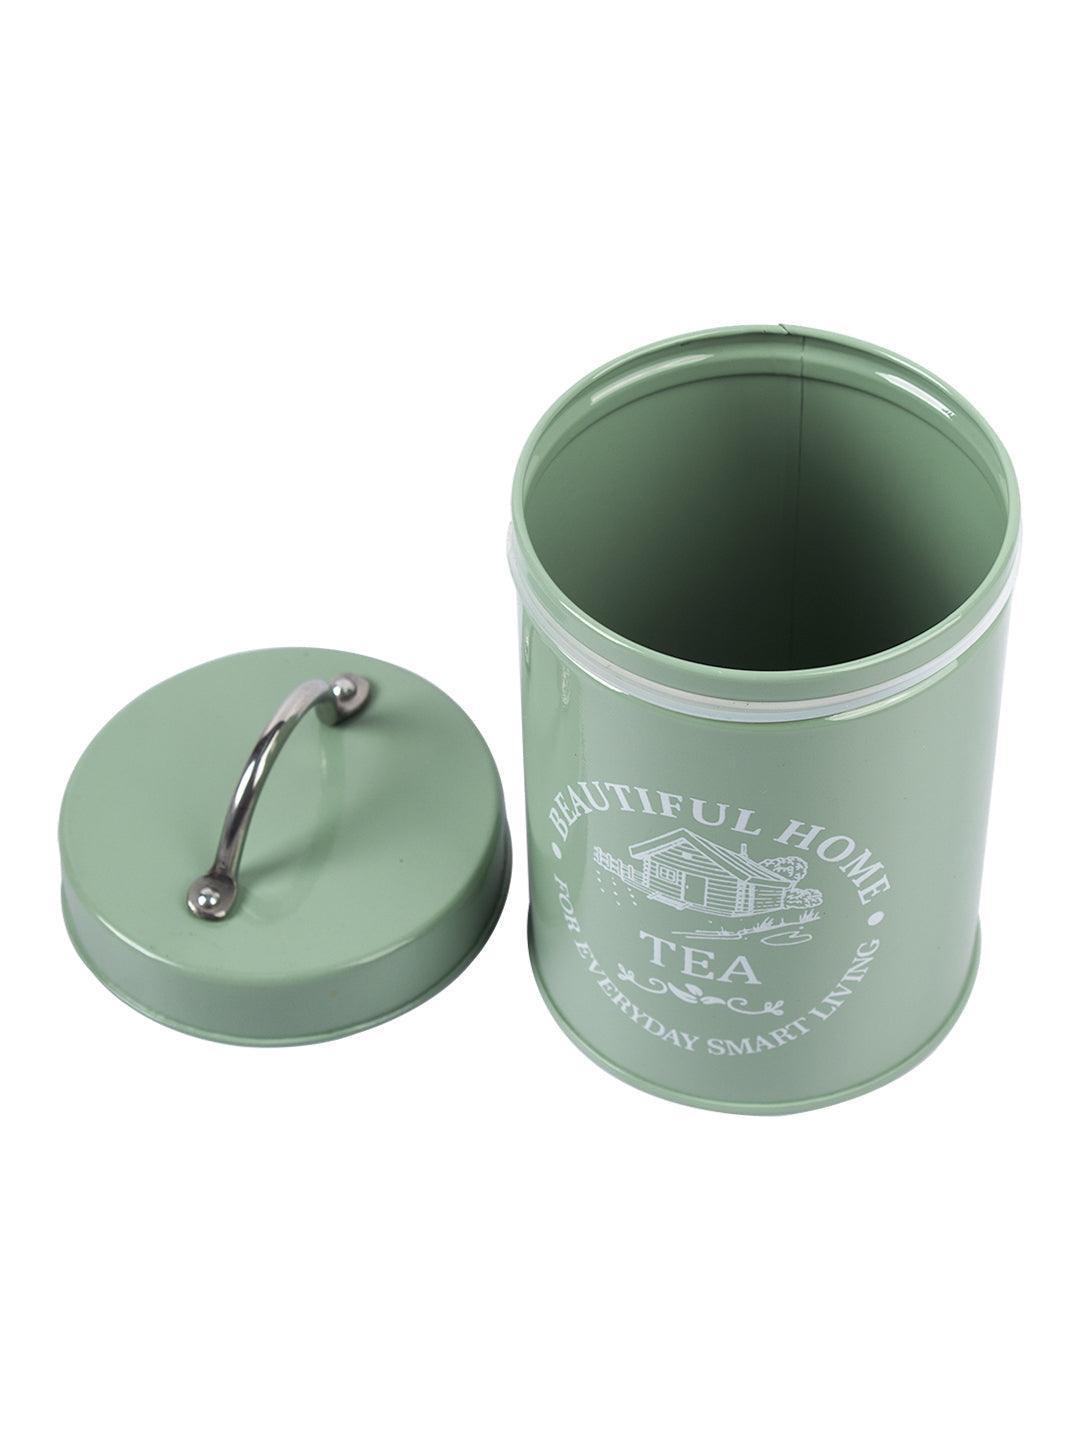 Tea & Sugar Storage Jar with Lid - Set Of 2, Each 850mL